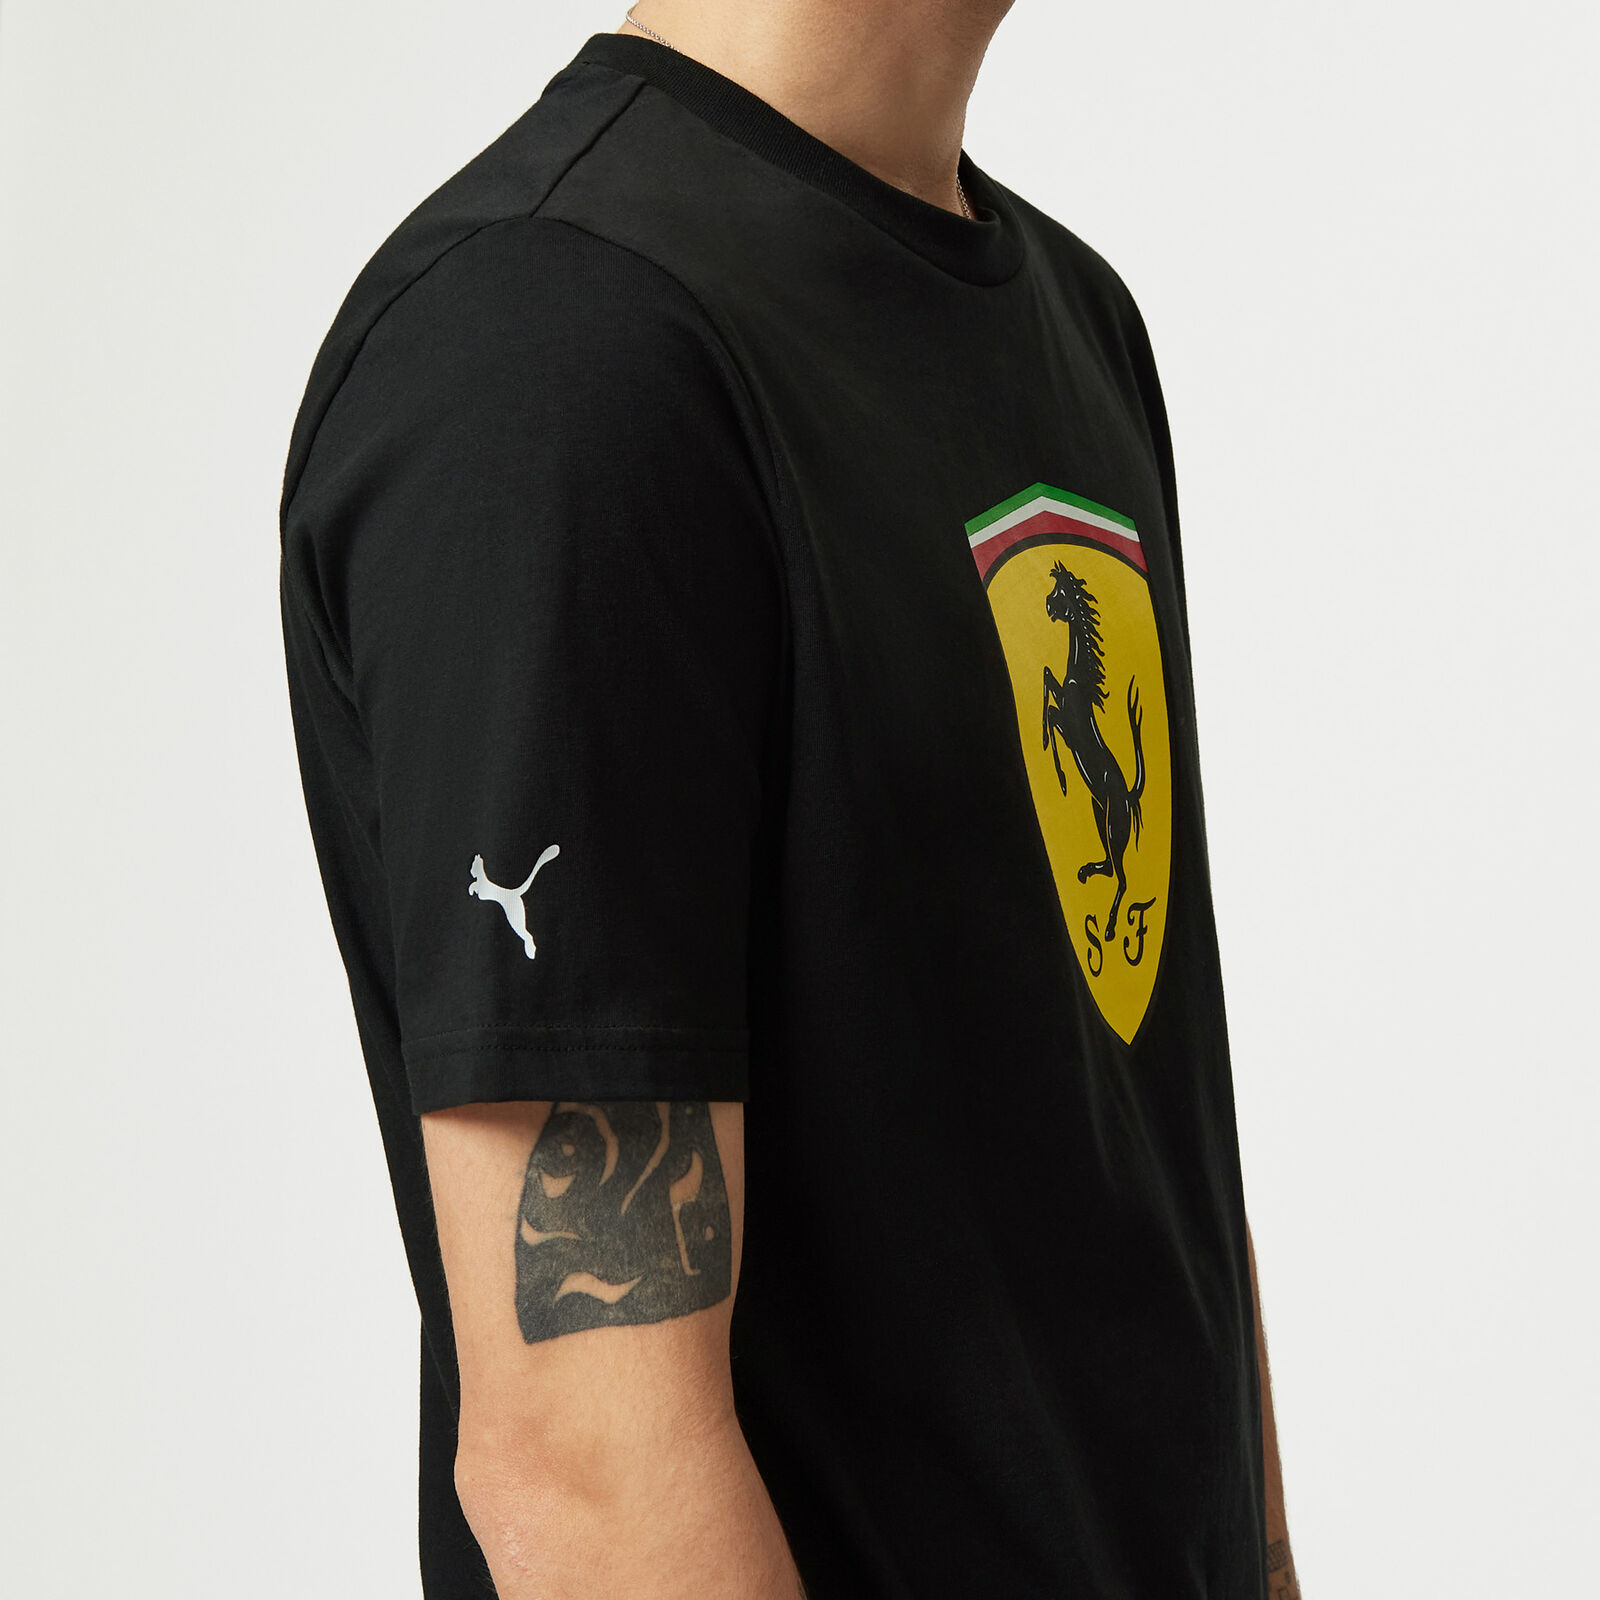 Shield T-shirt - Scuderia Ferrari F1